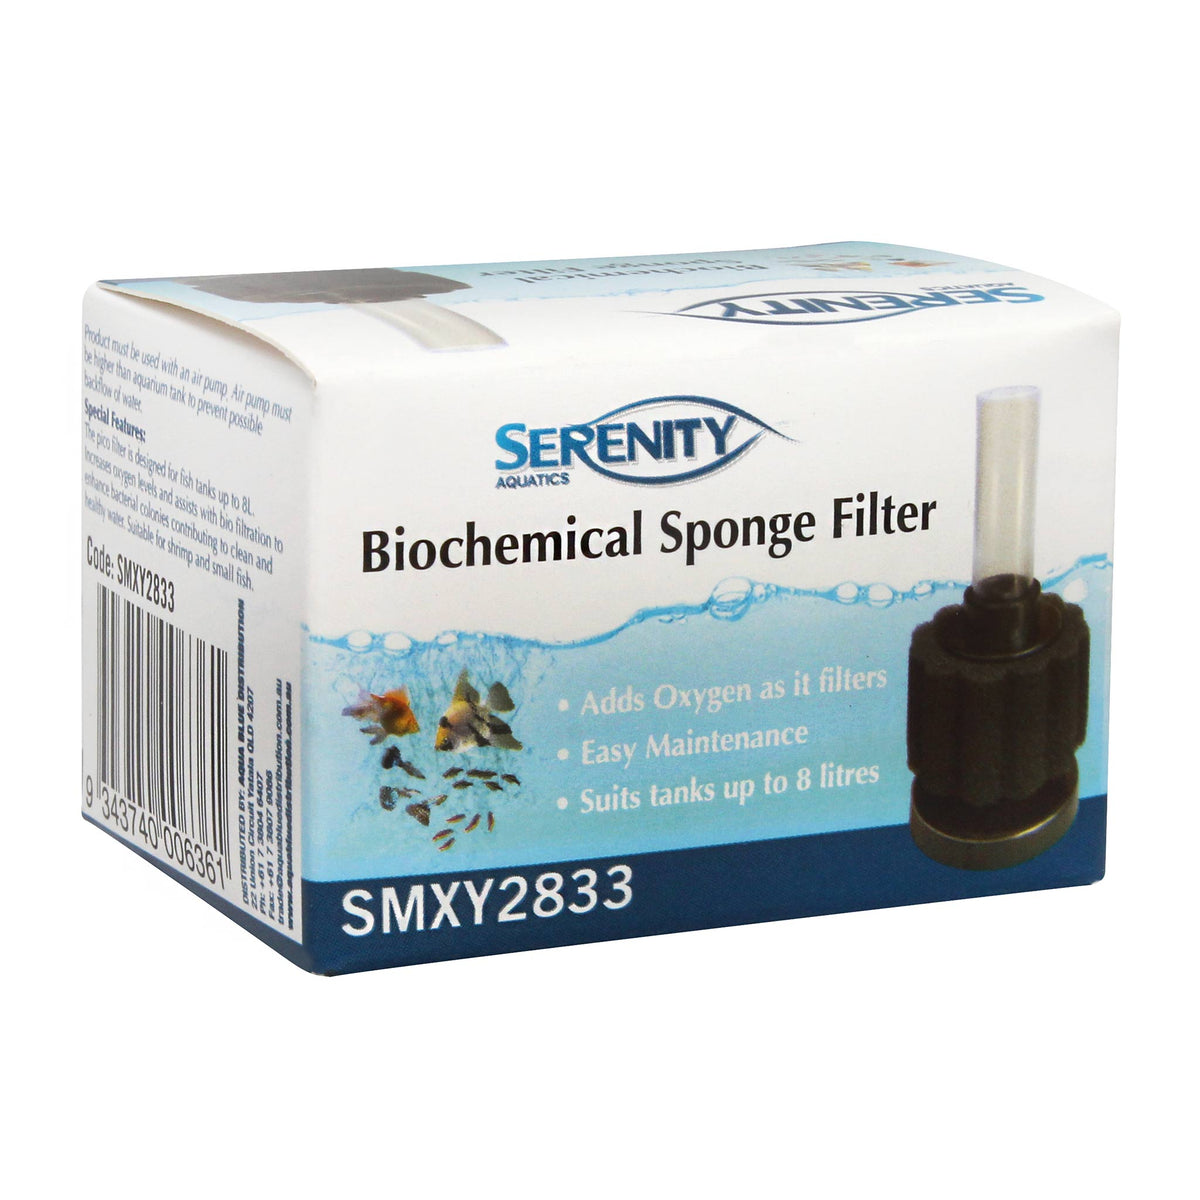 Serenity Aquatics Biochemical Sponge Filter